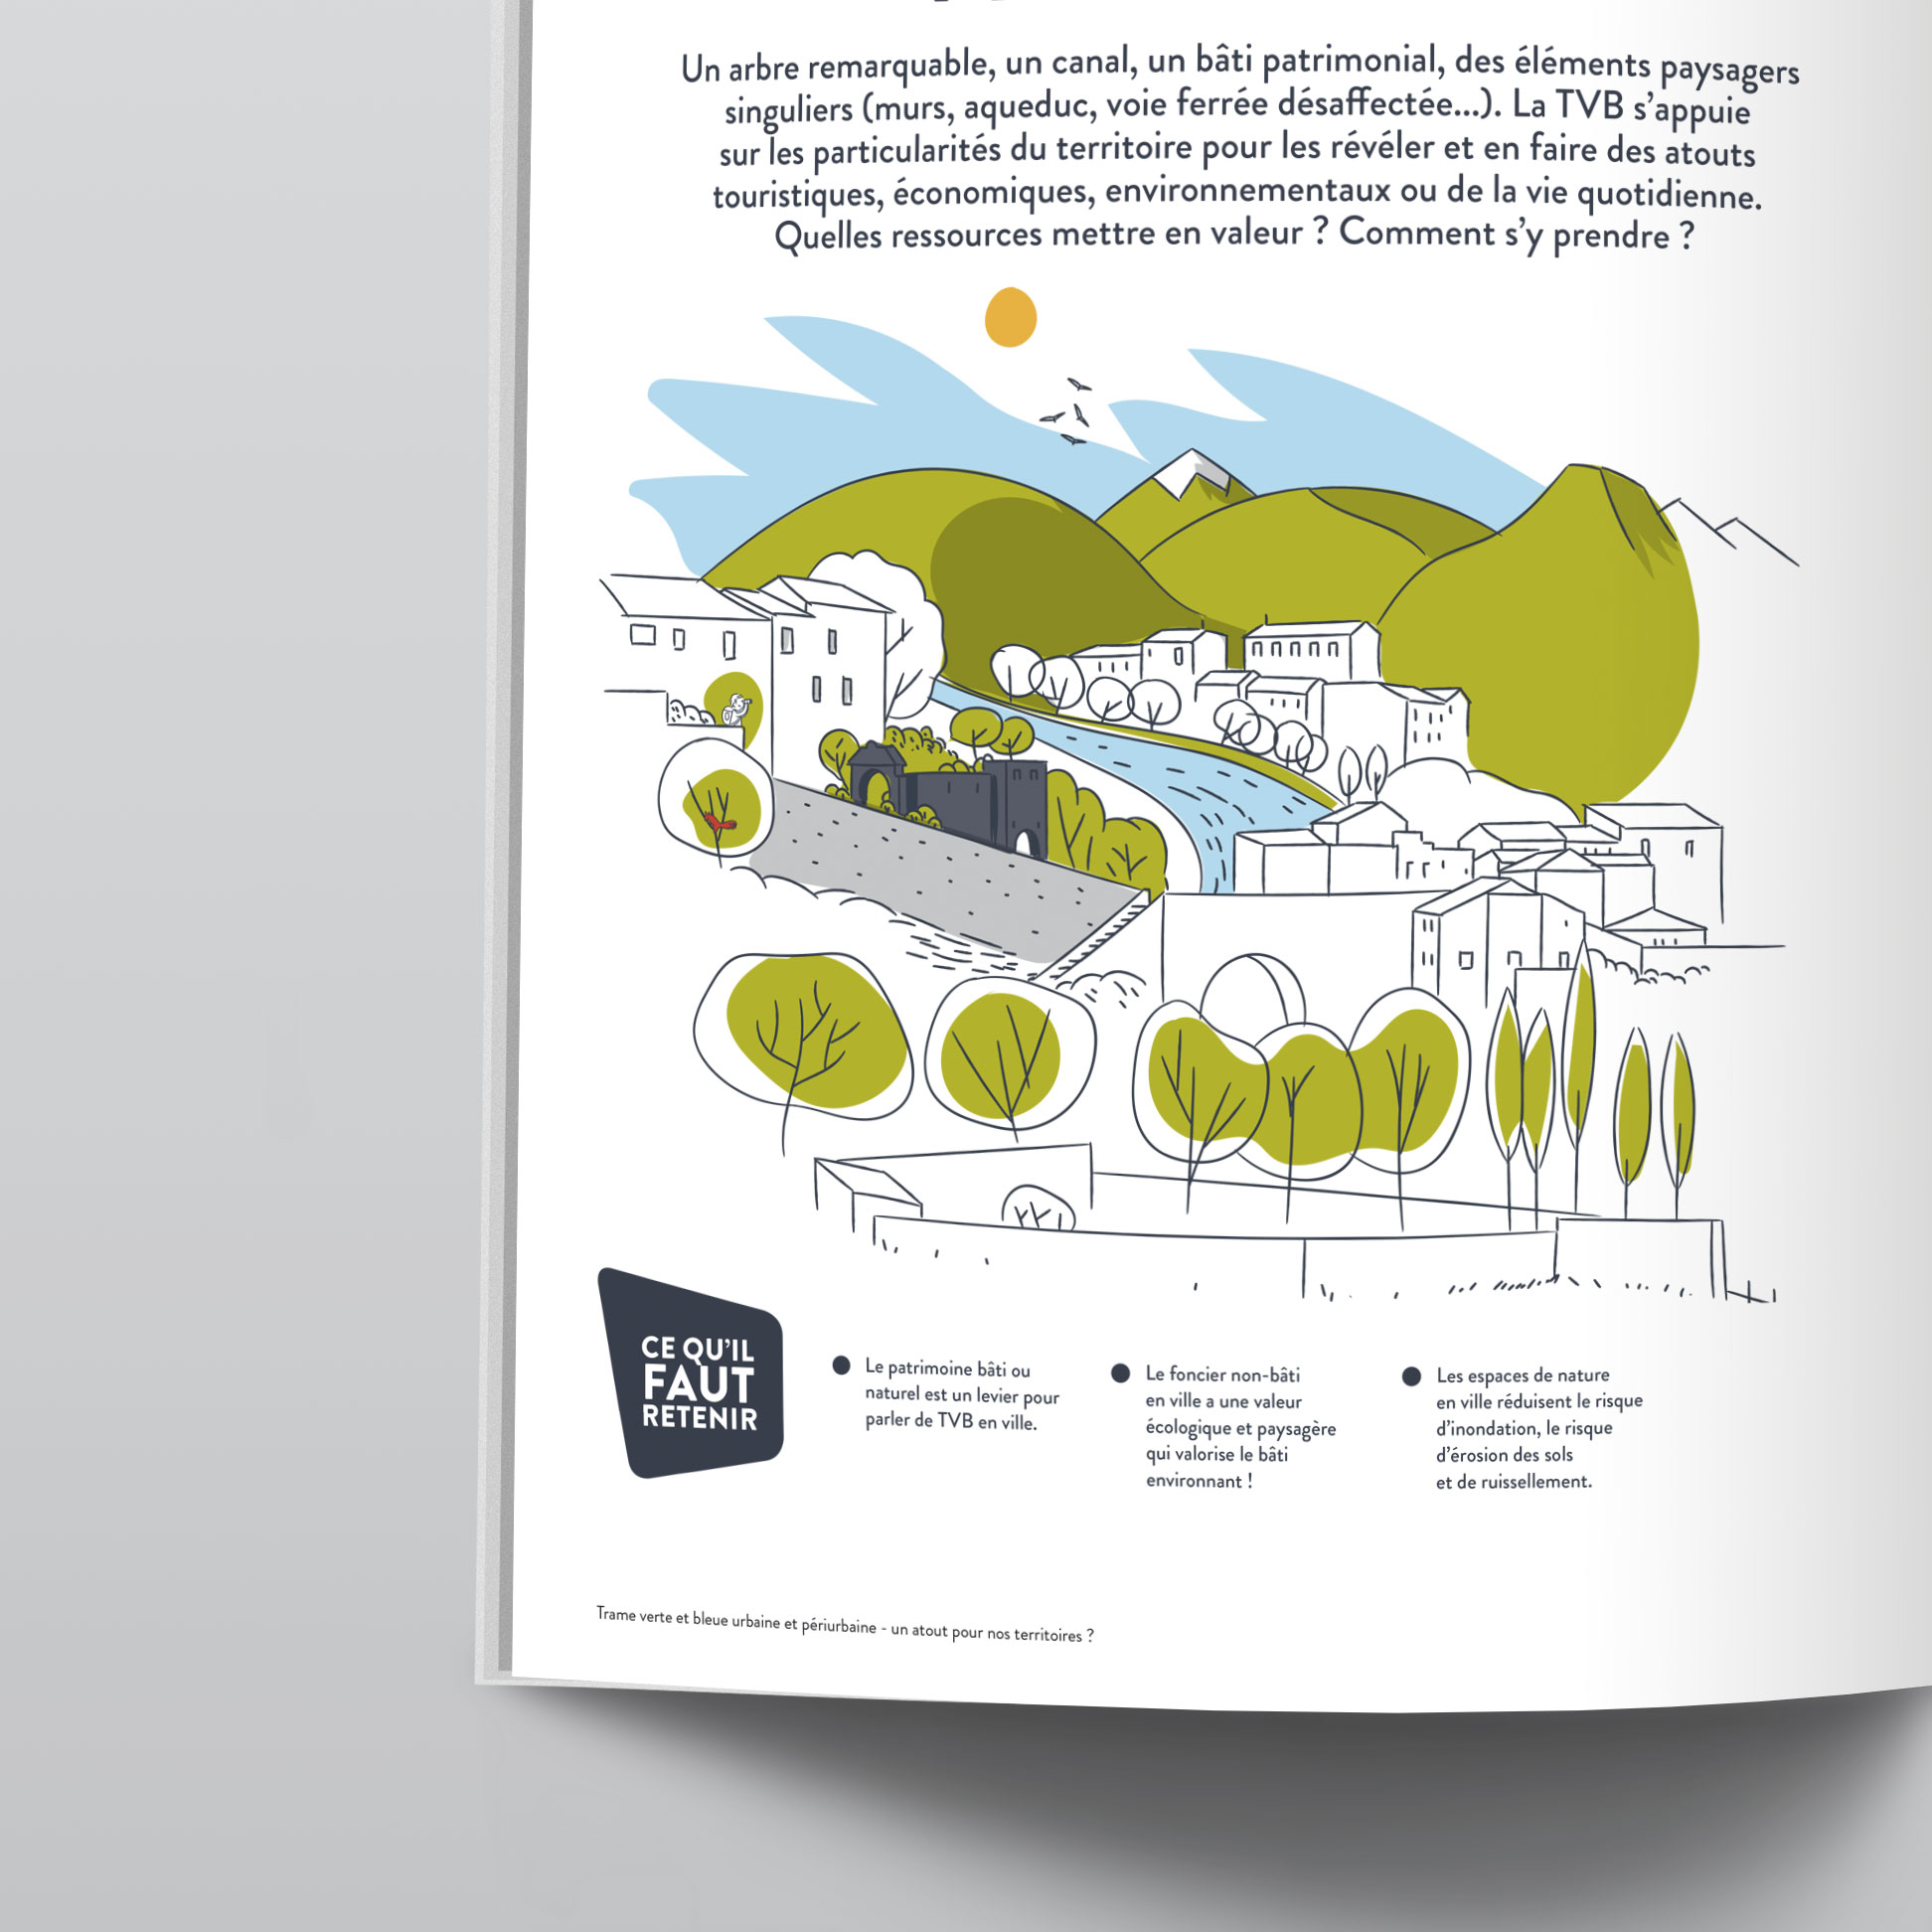 URCAUE guide methodologique trame verte bleue brochure illustration